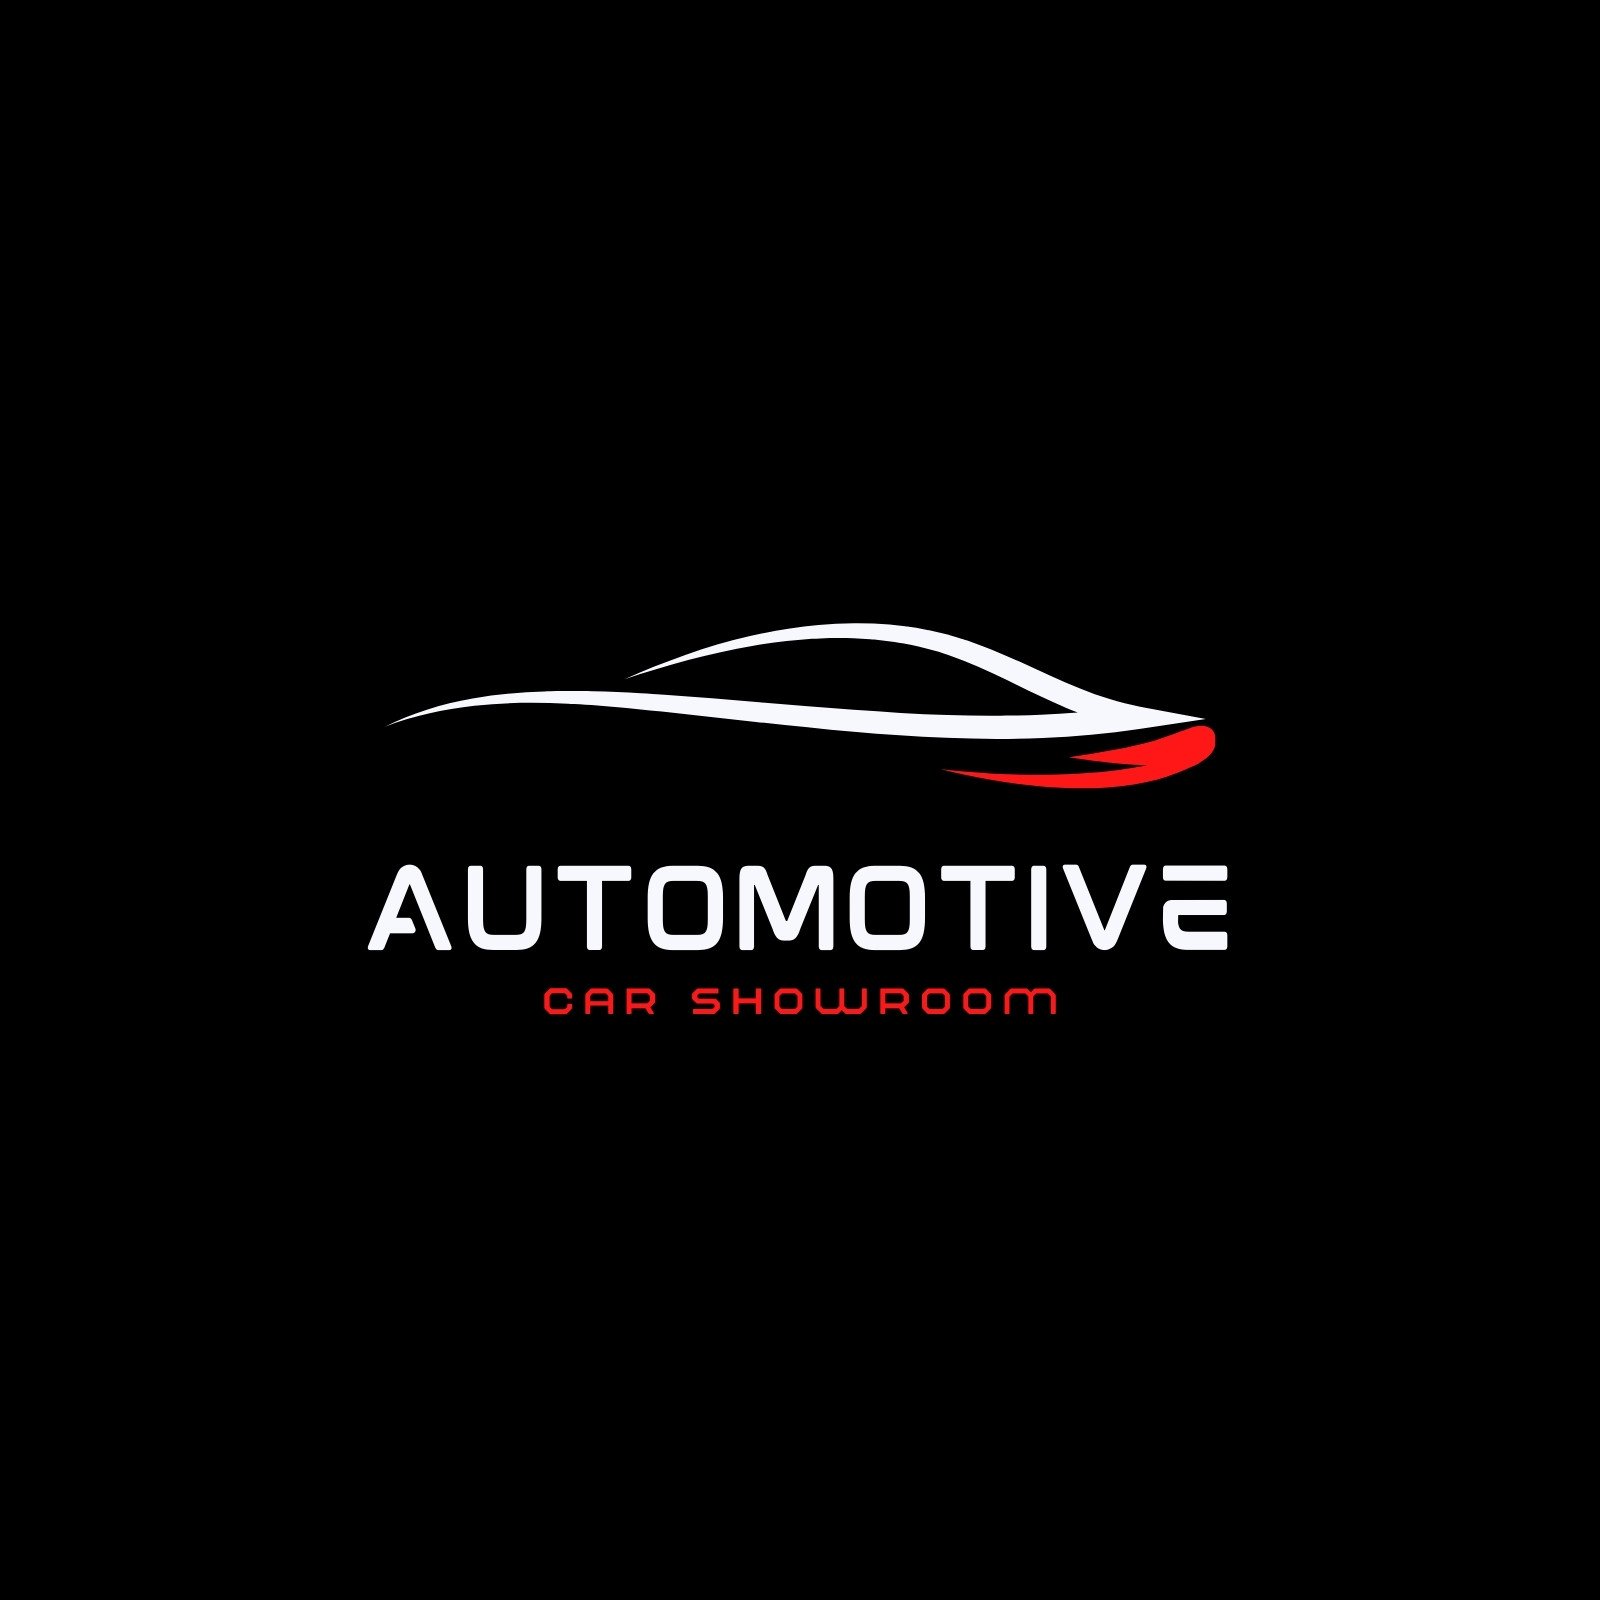 Black and Red Modern Automotive Car Logo